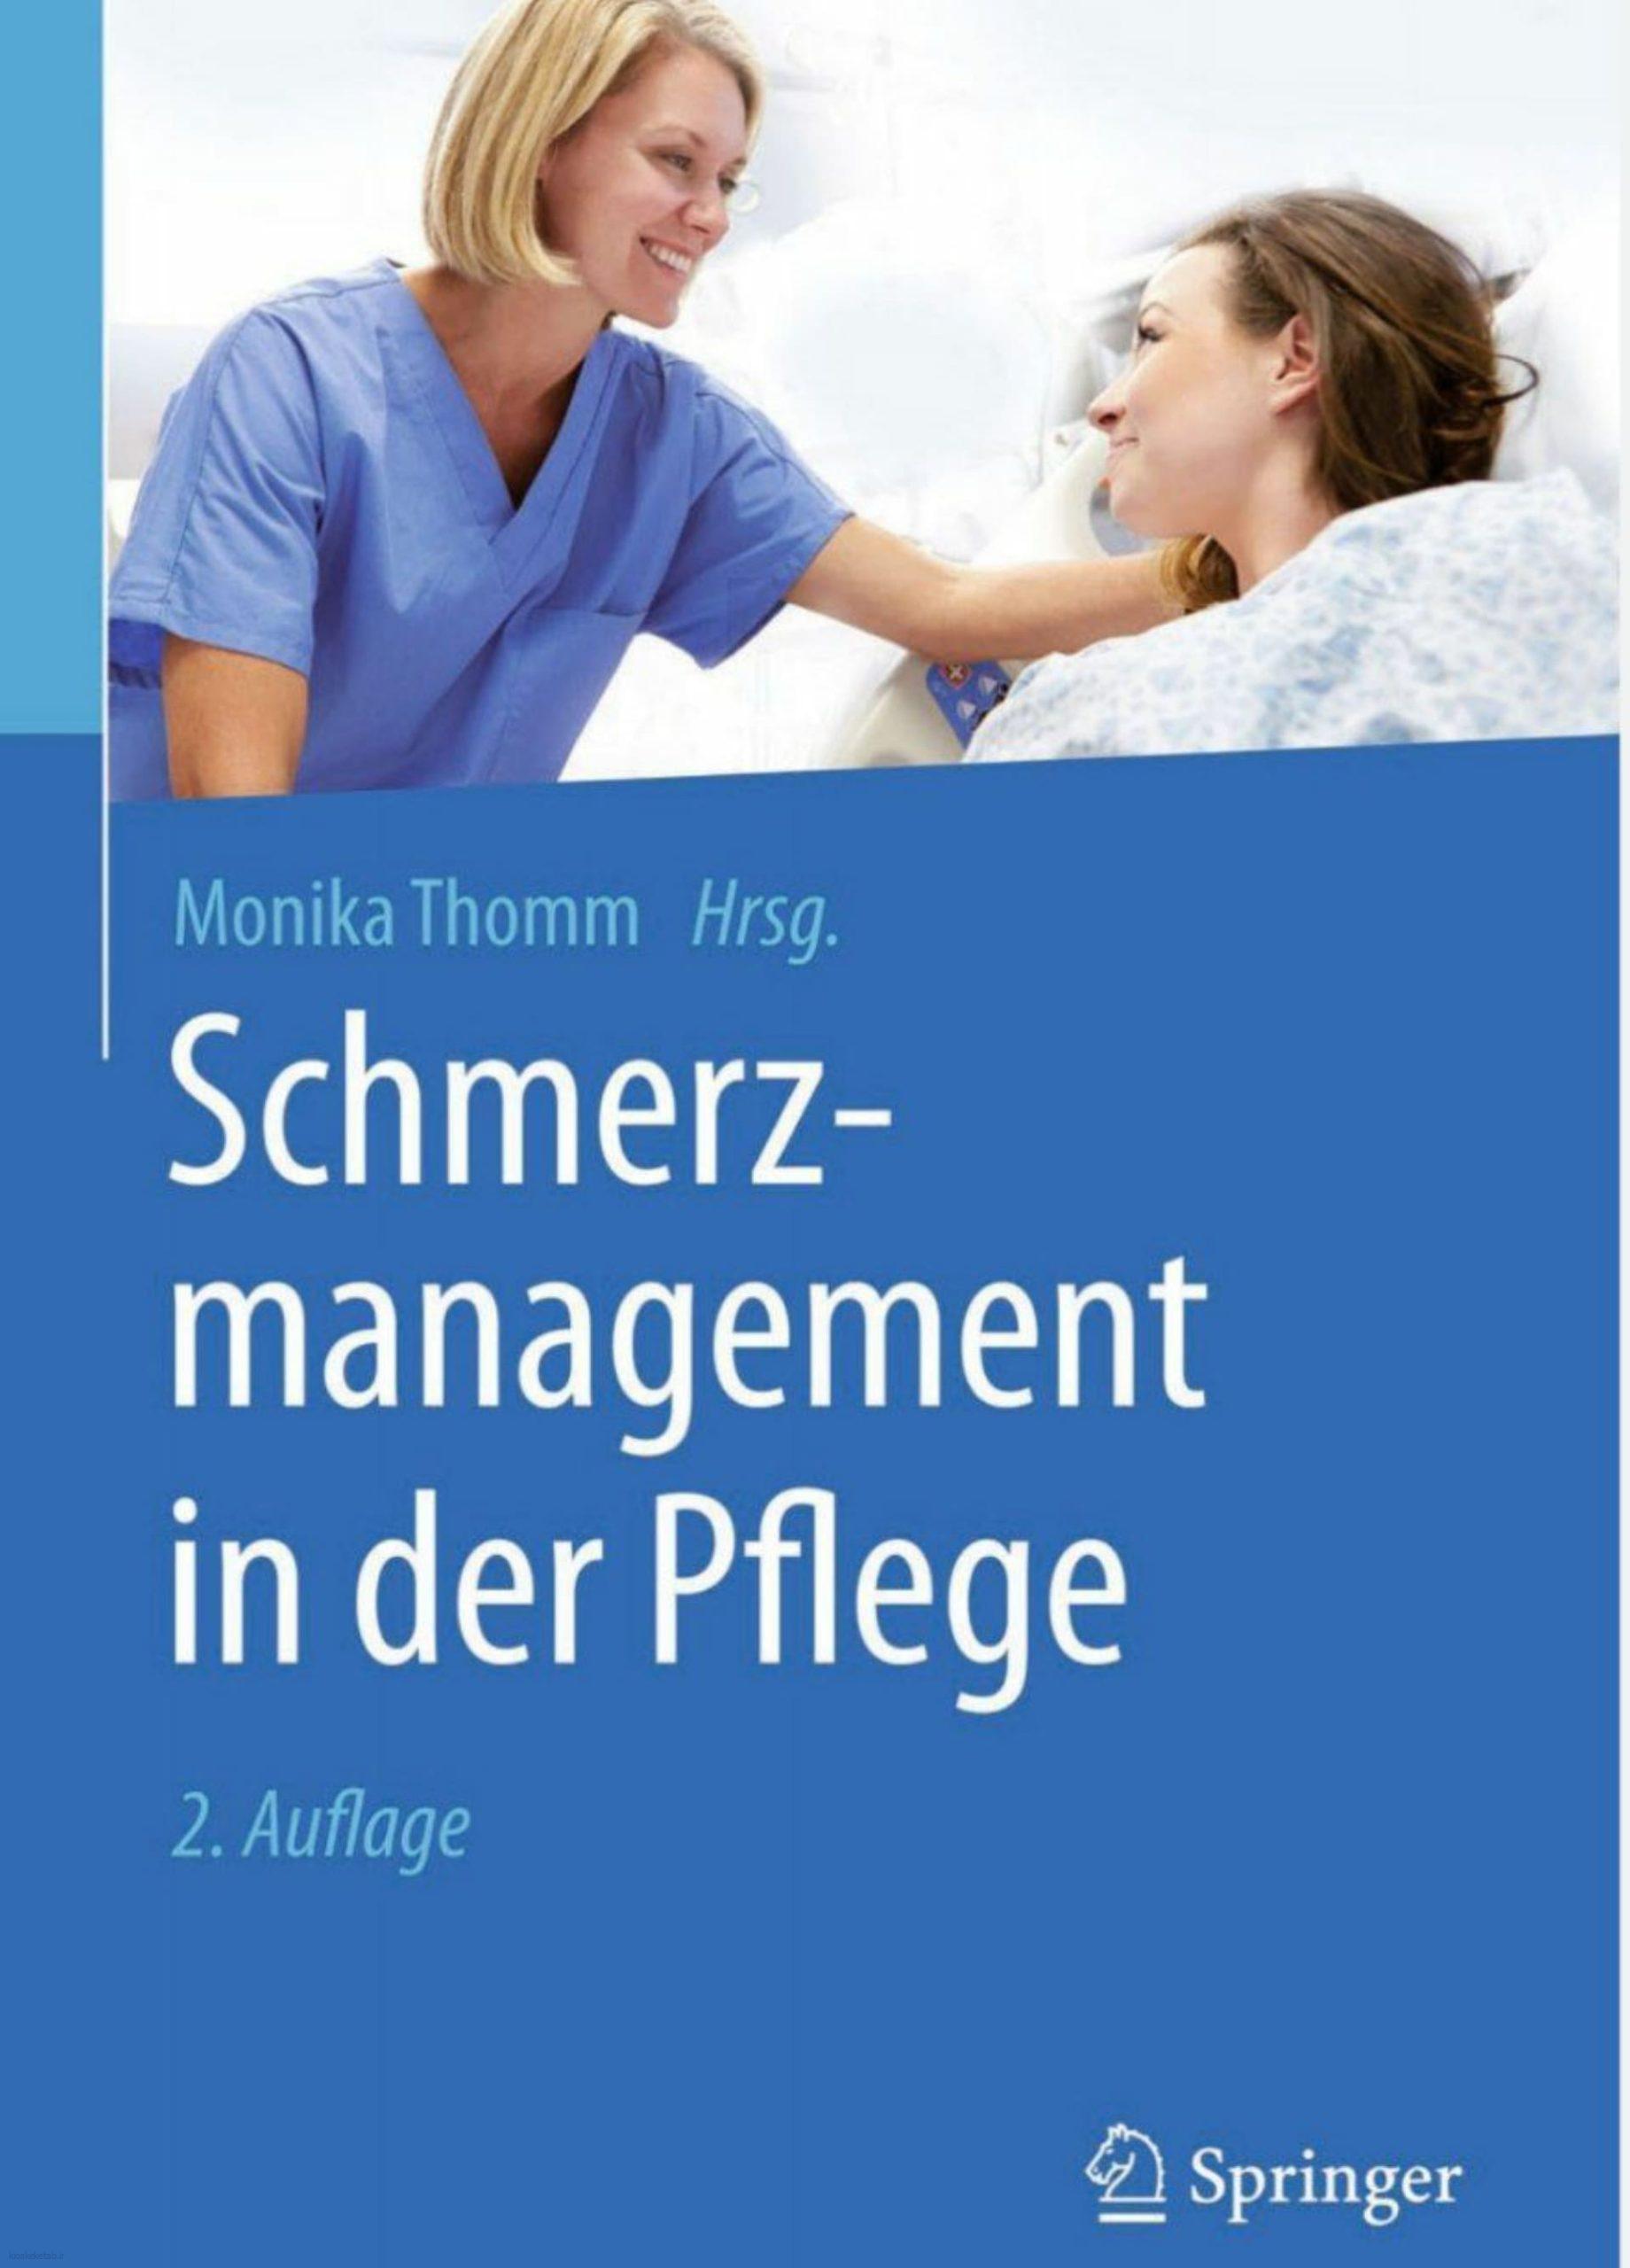 دانلود کتاب آلمانیschmerz management in der pflege